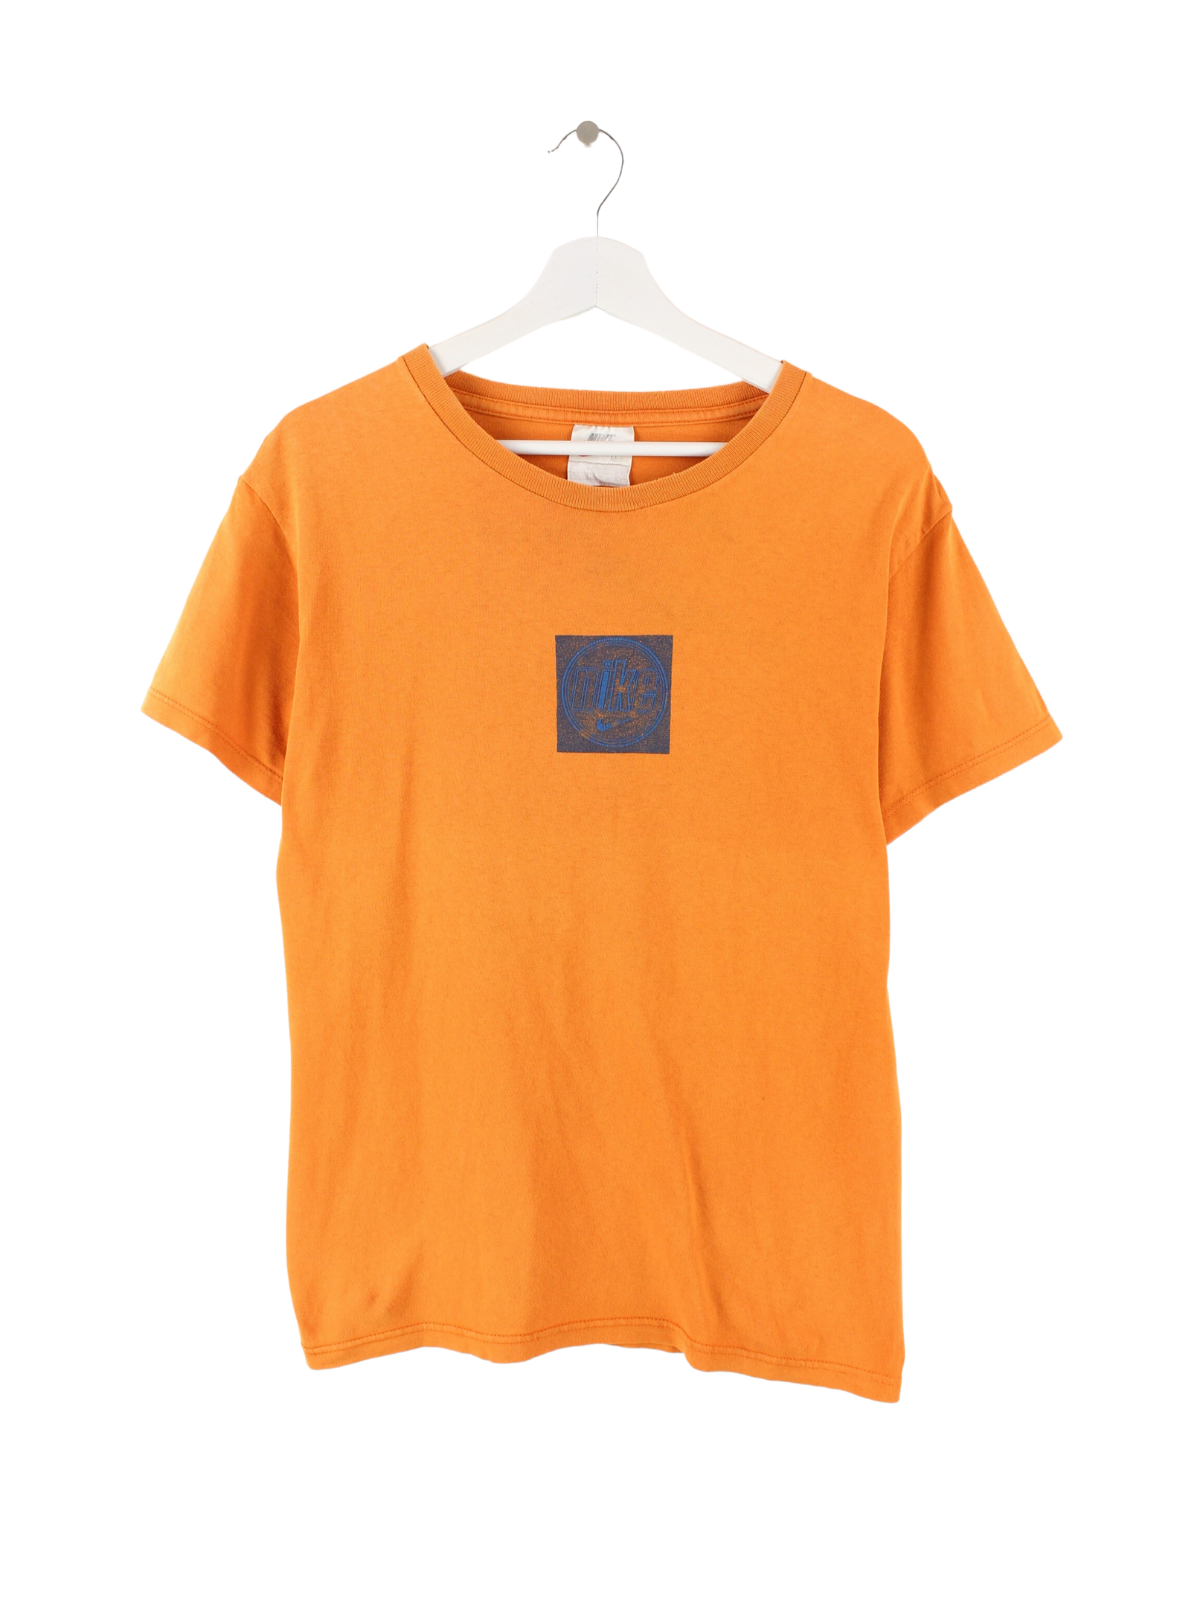 Nike 90s Print T-Shirt Orange L